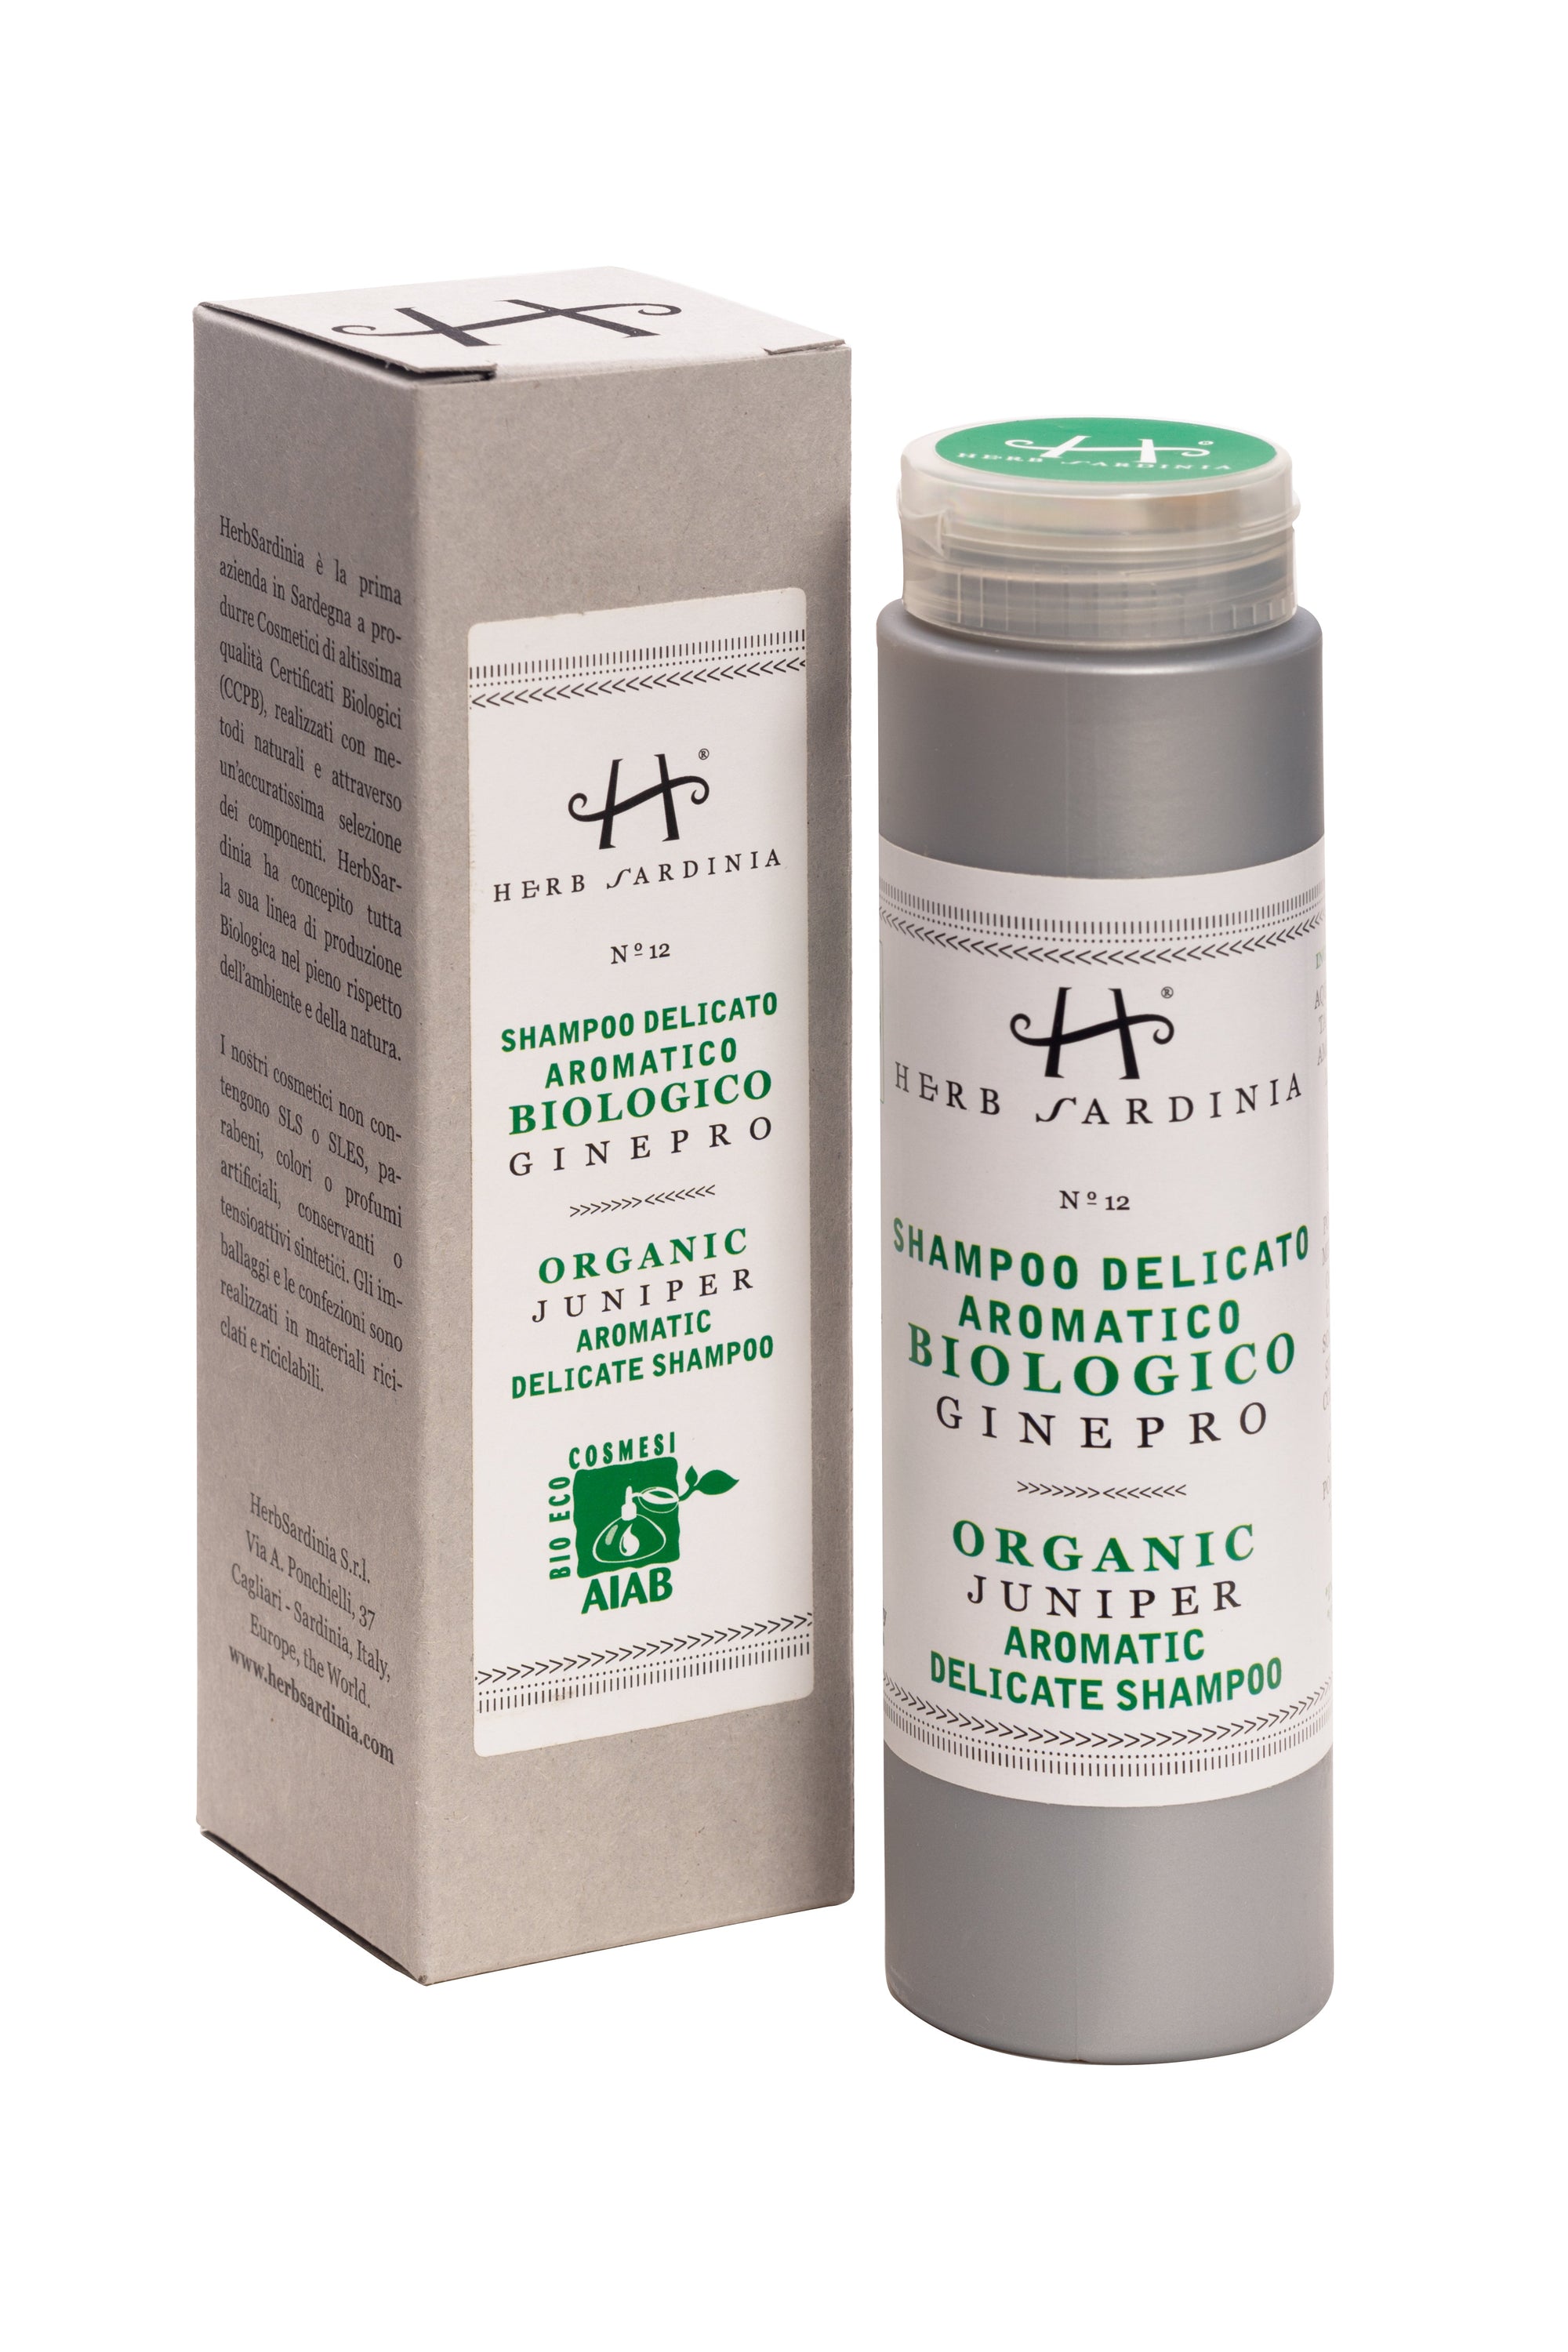 HerbSardinia Organic Juniper Delicate Shampoo 200 ml